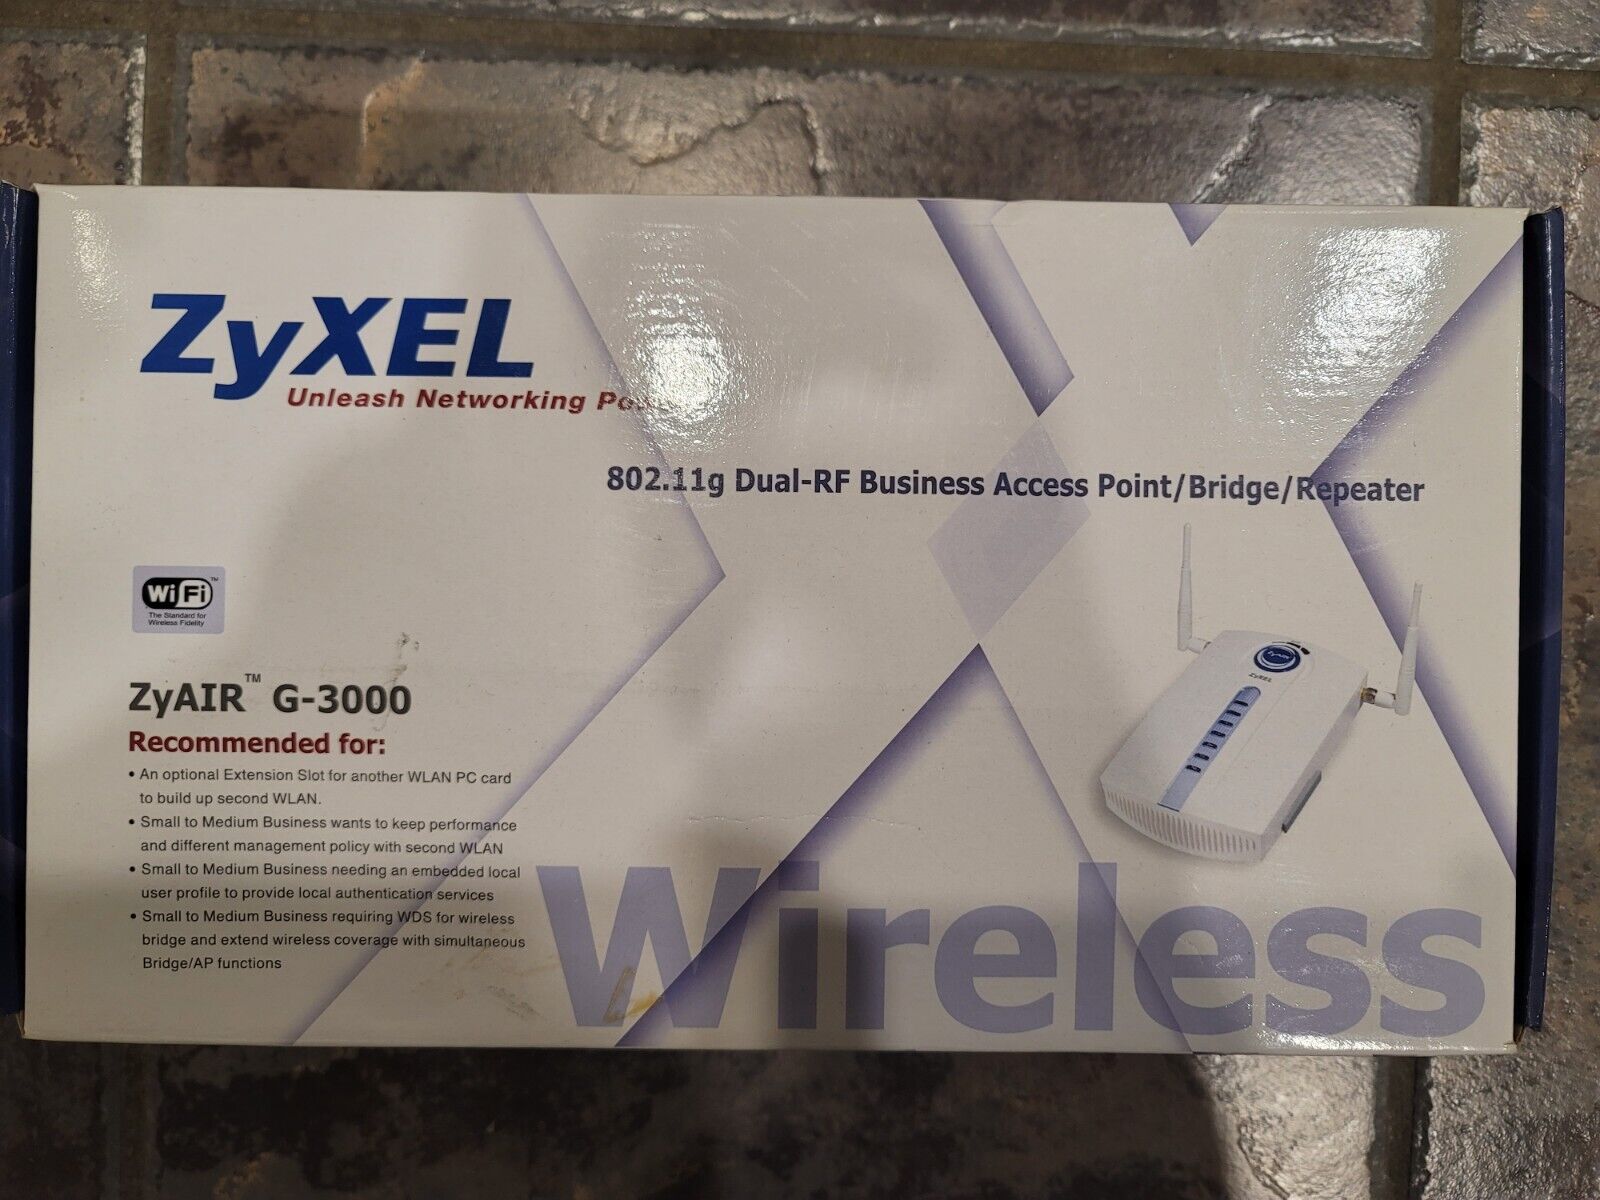 ZyXEL ZyAir G-3000 802.11g Dual-RF Business Access Point/Bridge/Repeater - WAP